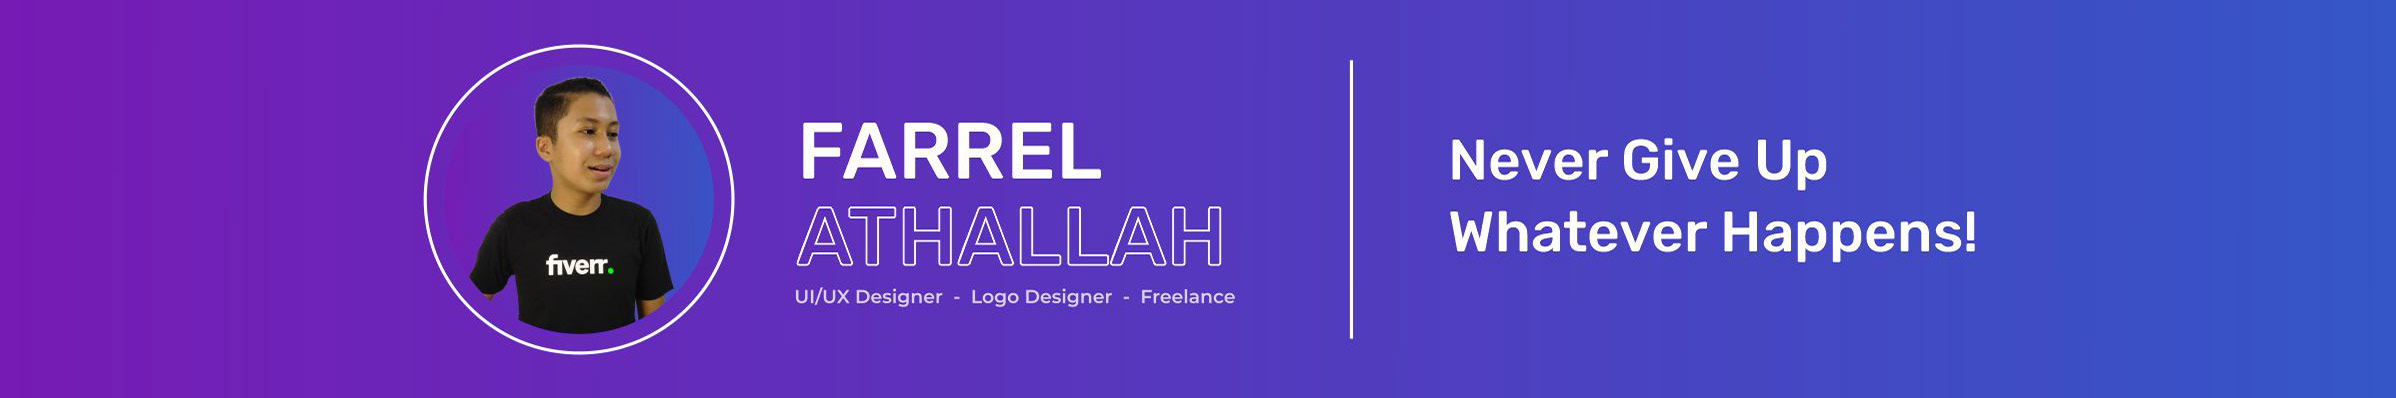 farrel athallah's profile banner